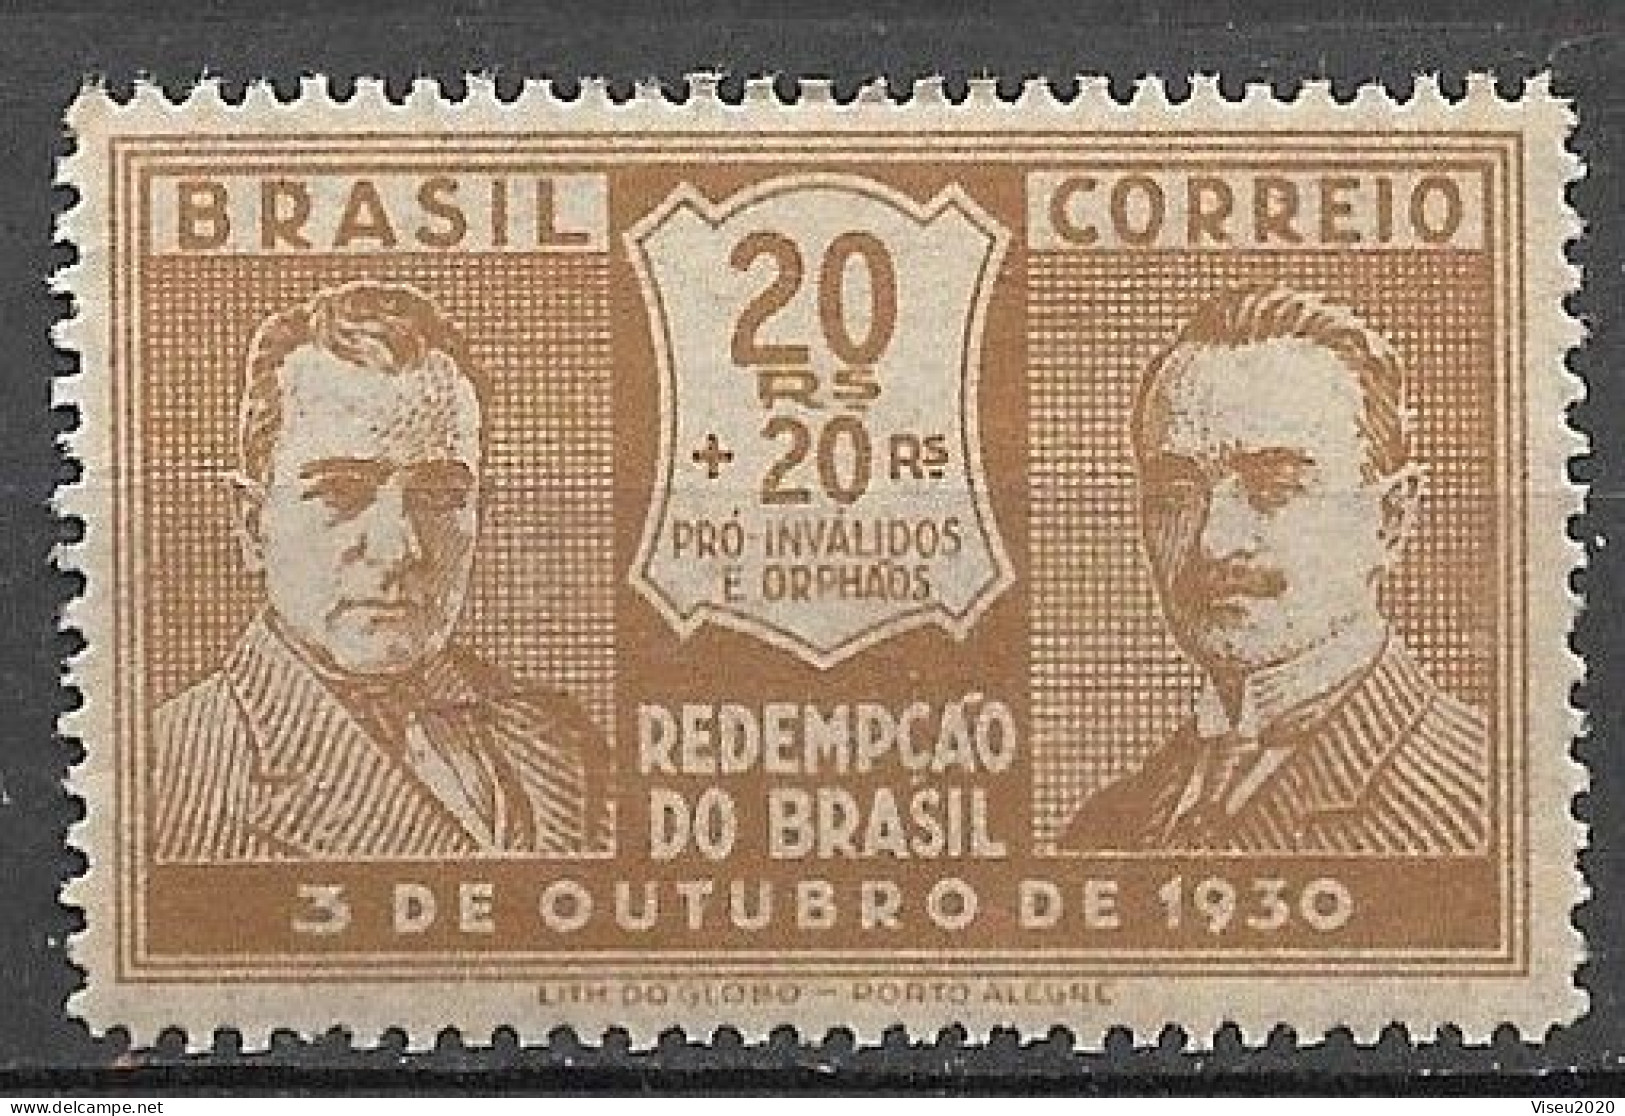 Brasil Brazil 1931 - Revolução De 03 De Outubro De 1930 - RHM C28 - Unused Stamps